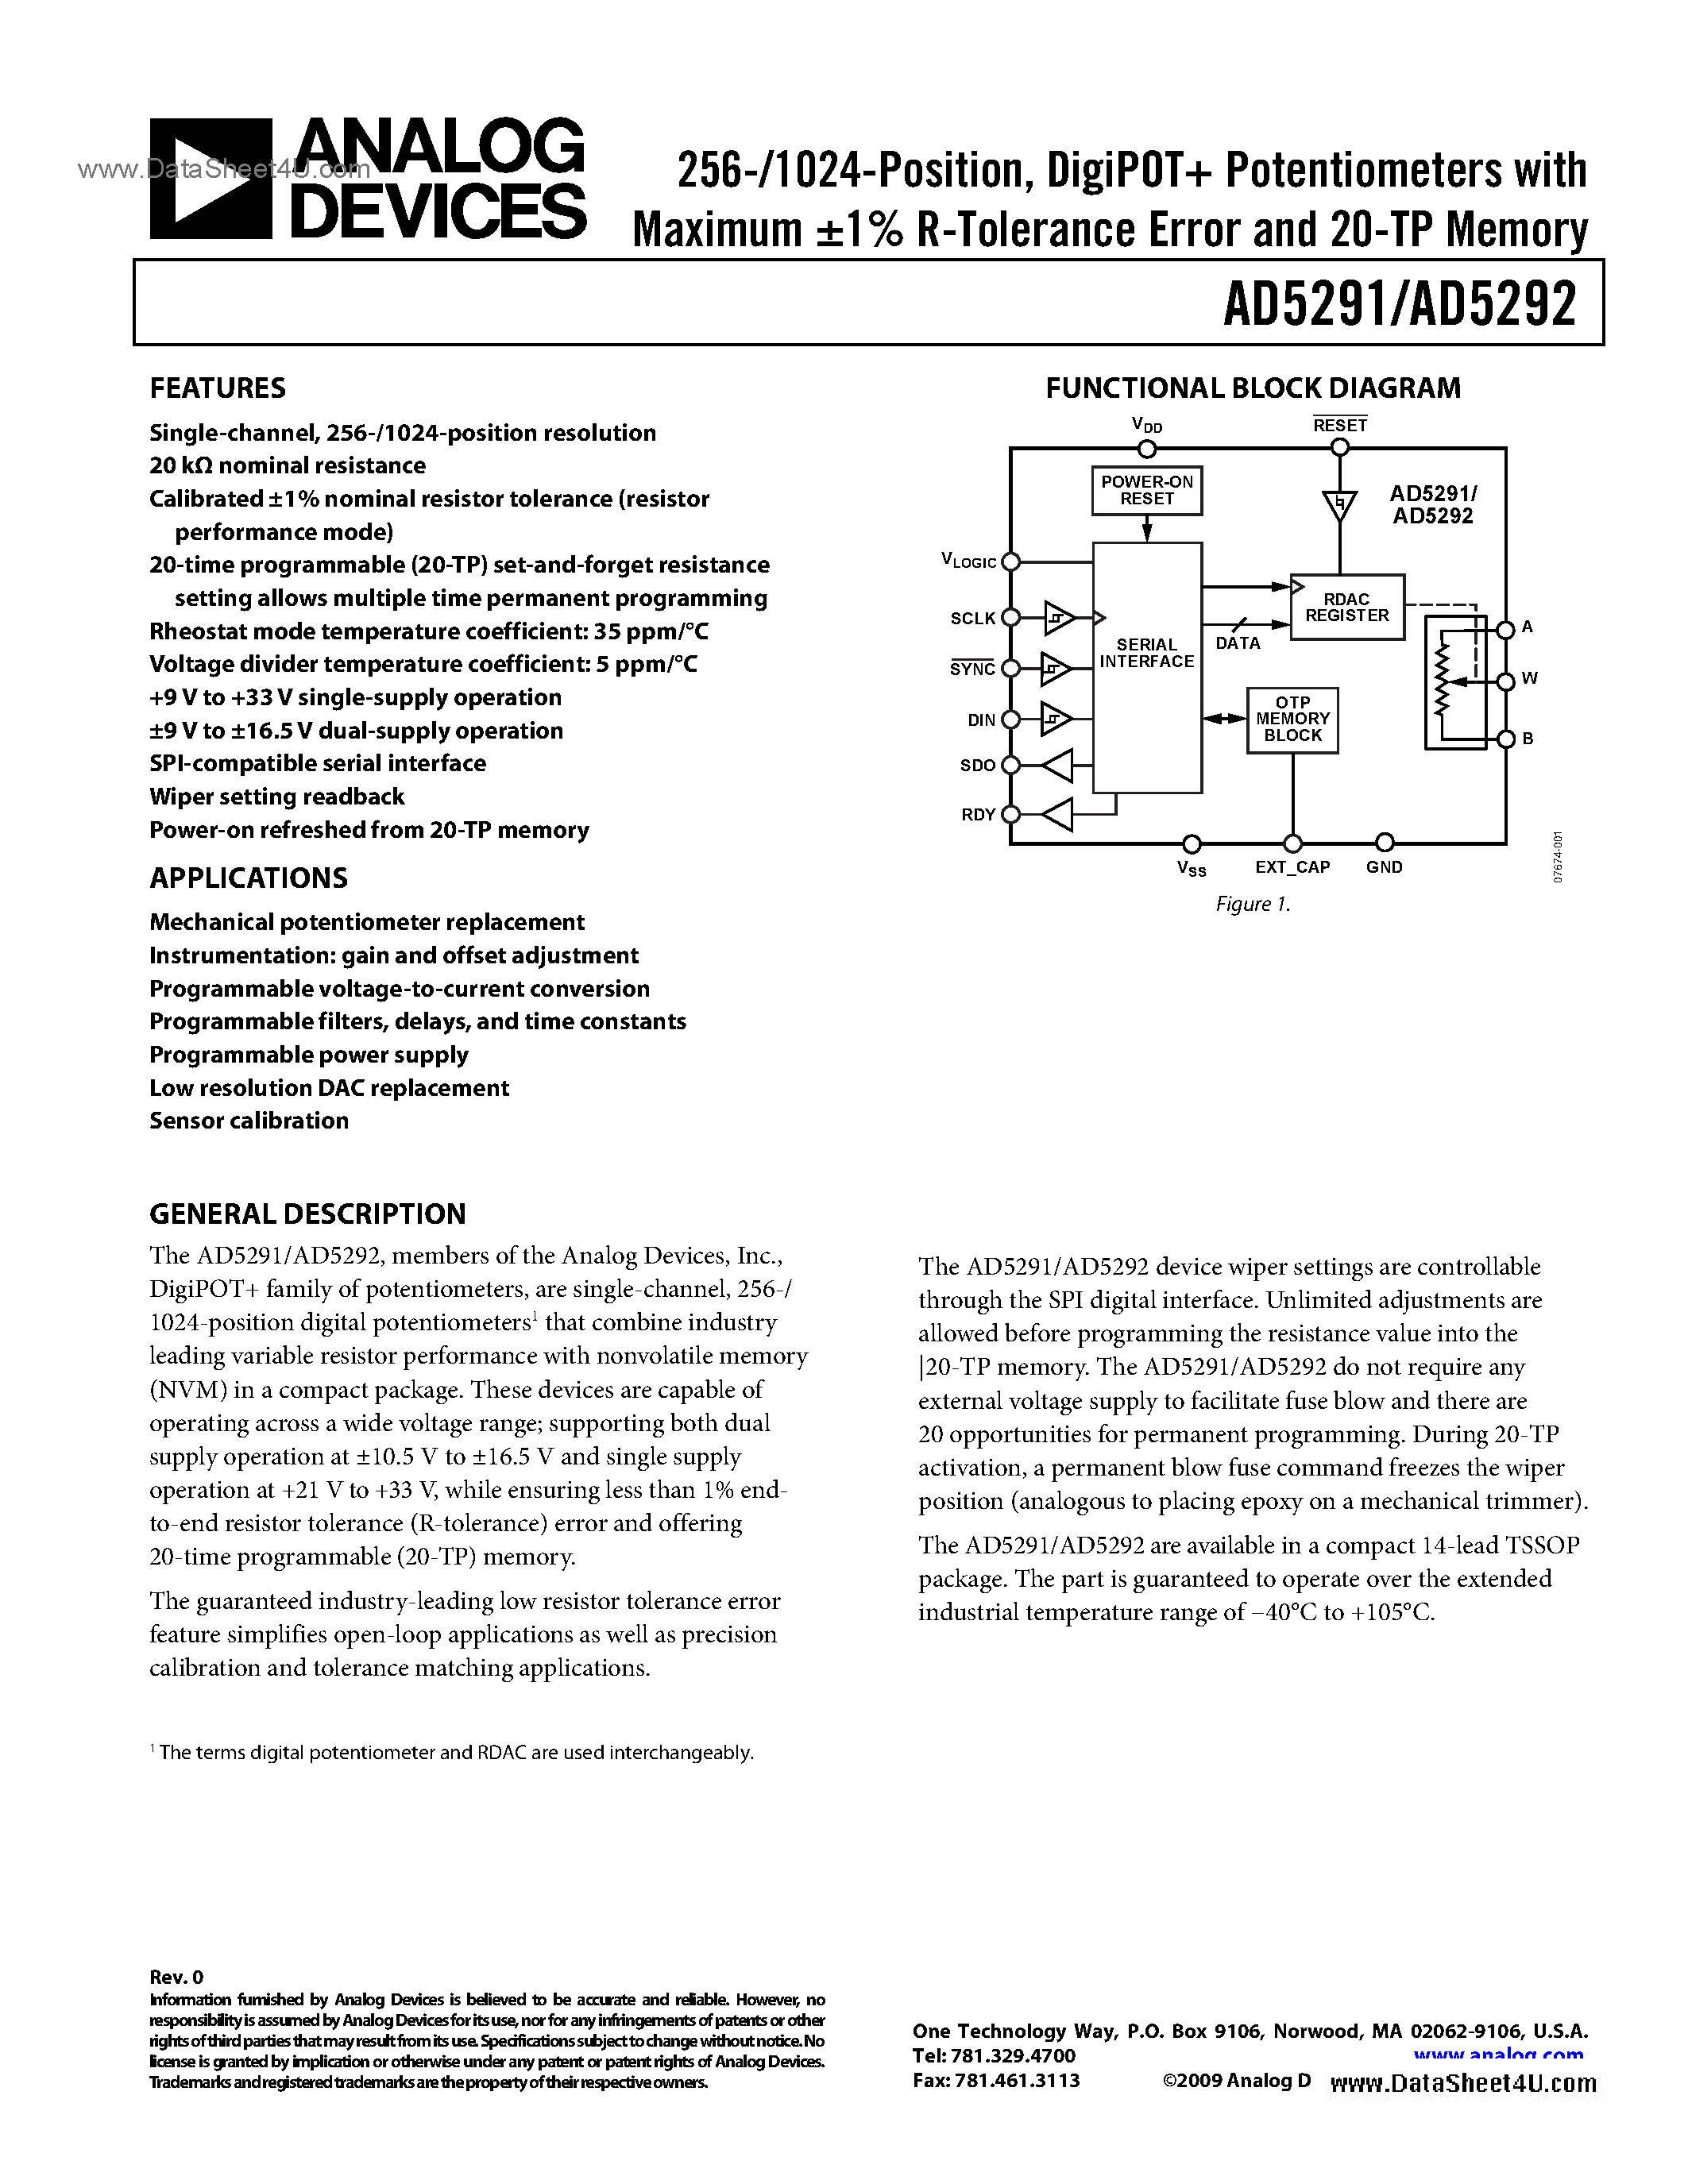 Даташит AD5291 - (AD5291 / AD5292) Digital Potentiometer страница 1